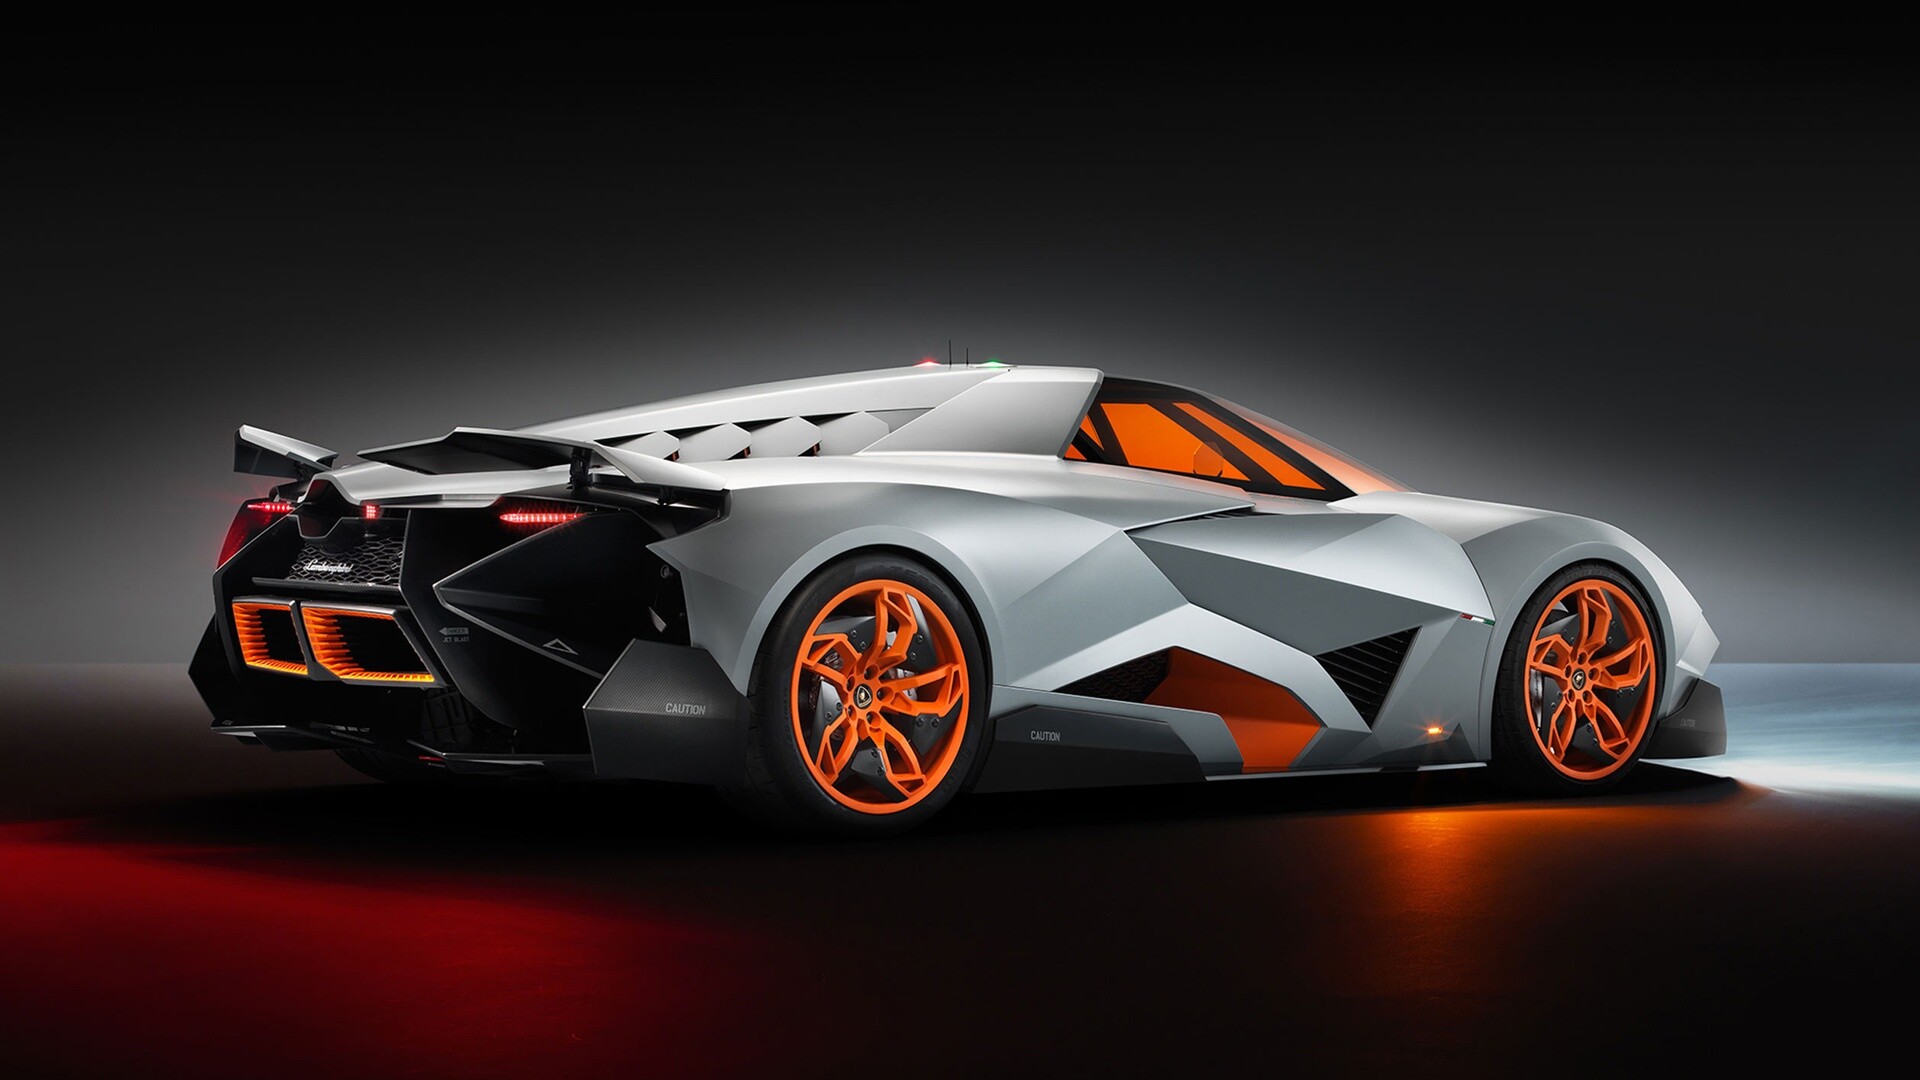 Lamborghini: The Veneno model was introduced in 2013, Egoista. 1920x1080 Full HD Wallpaper.